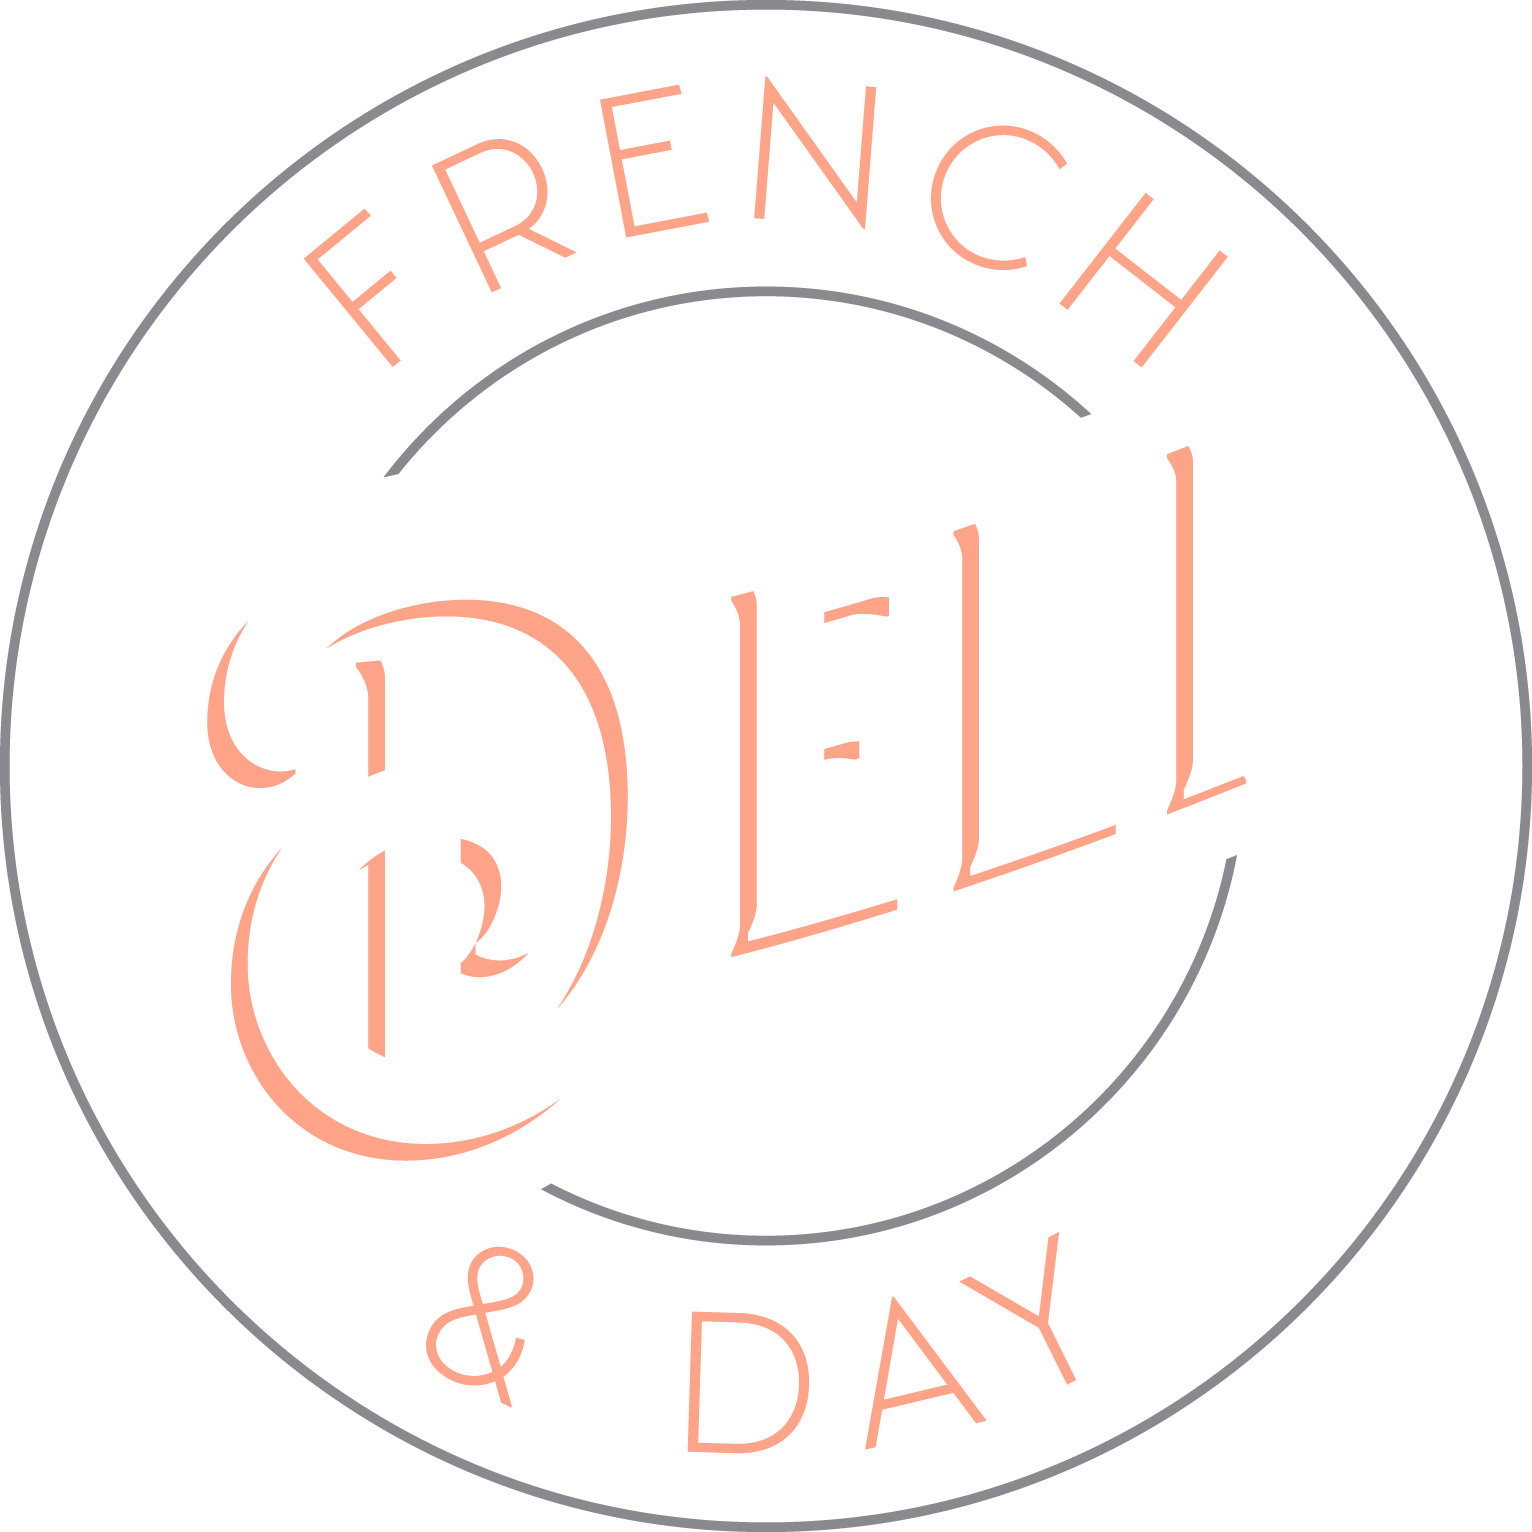 French & Day Deli logo